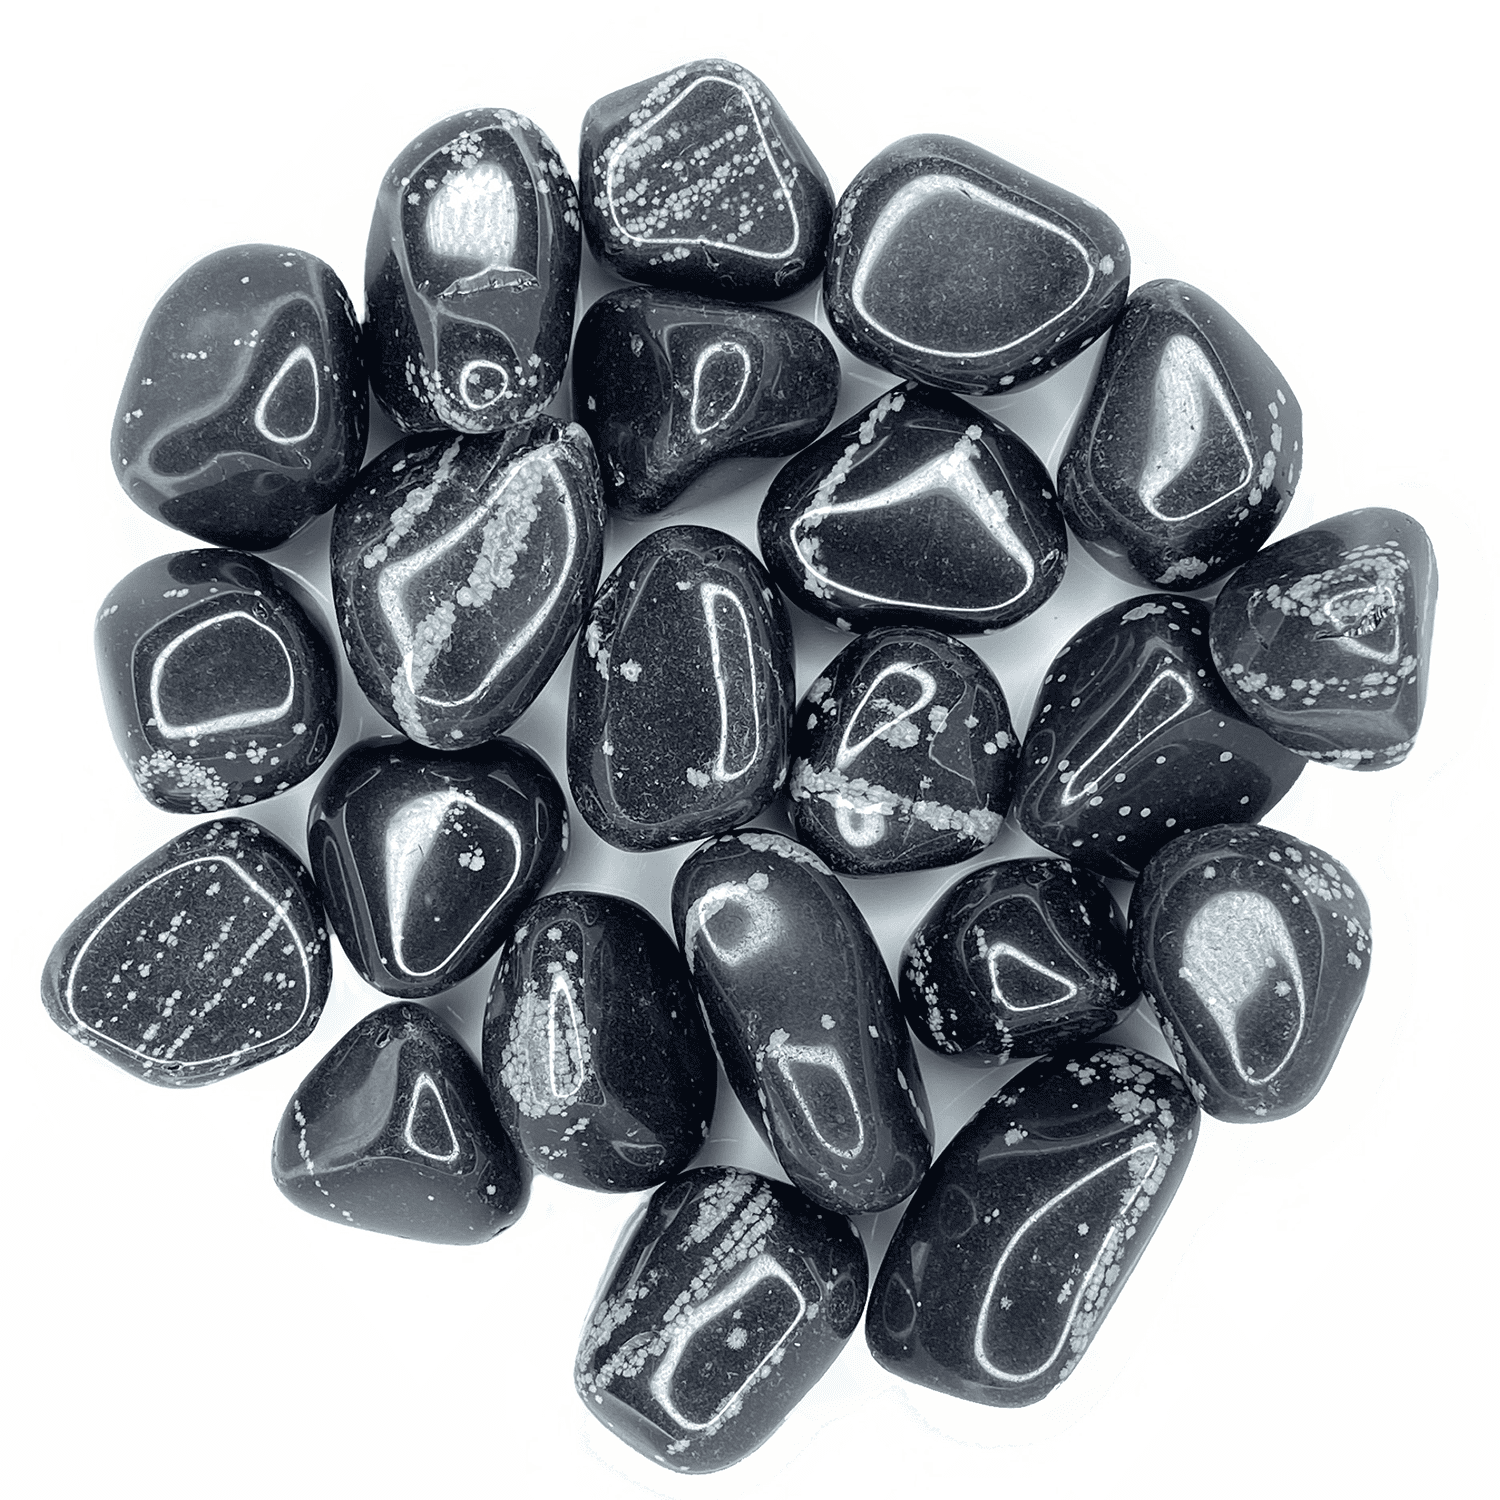 GOLD OBSIDIAN BLACK med-lg tumbled 1/2 lb bulk stones 